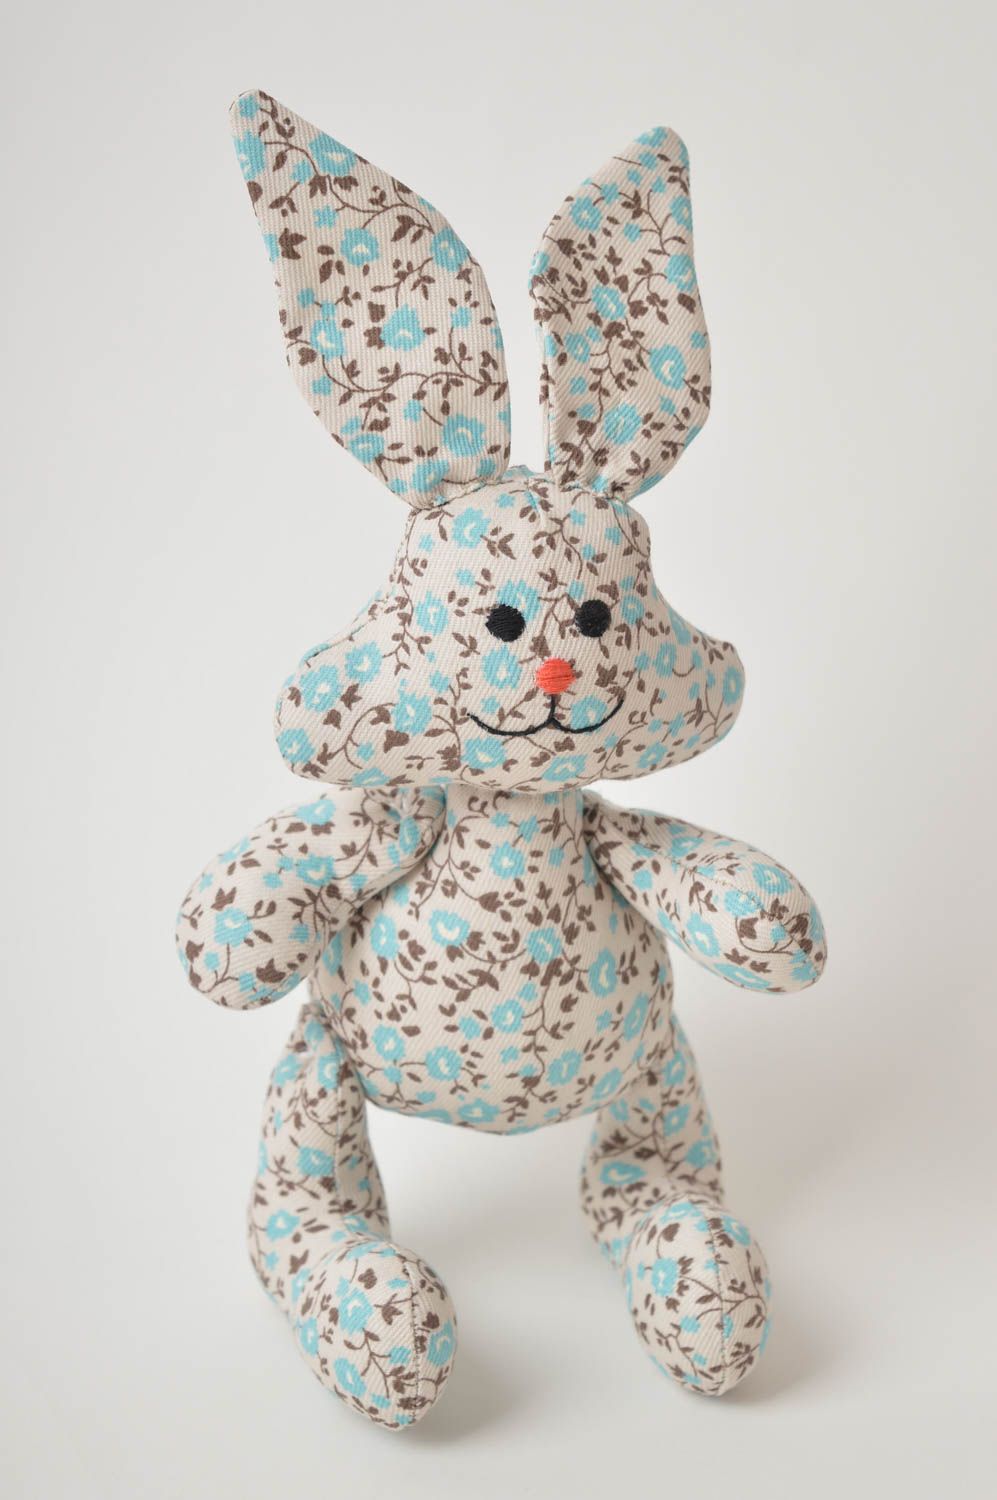 Decorative handmade bunny toy stuffed toy for children soft toy interior decor photo 2